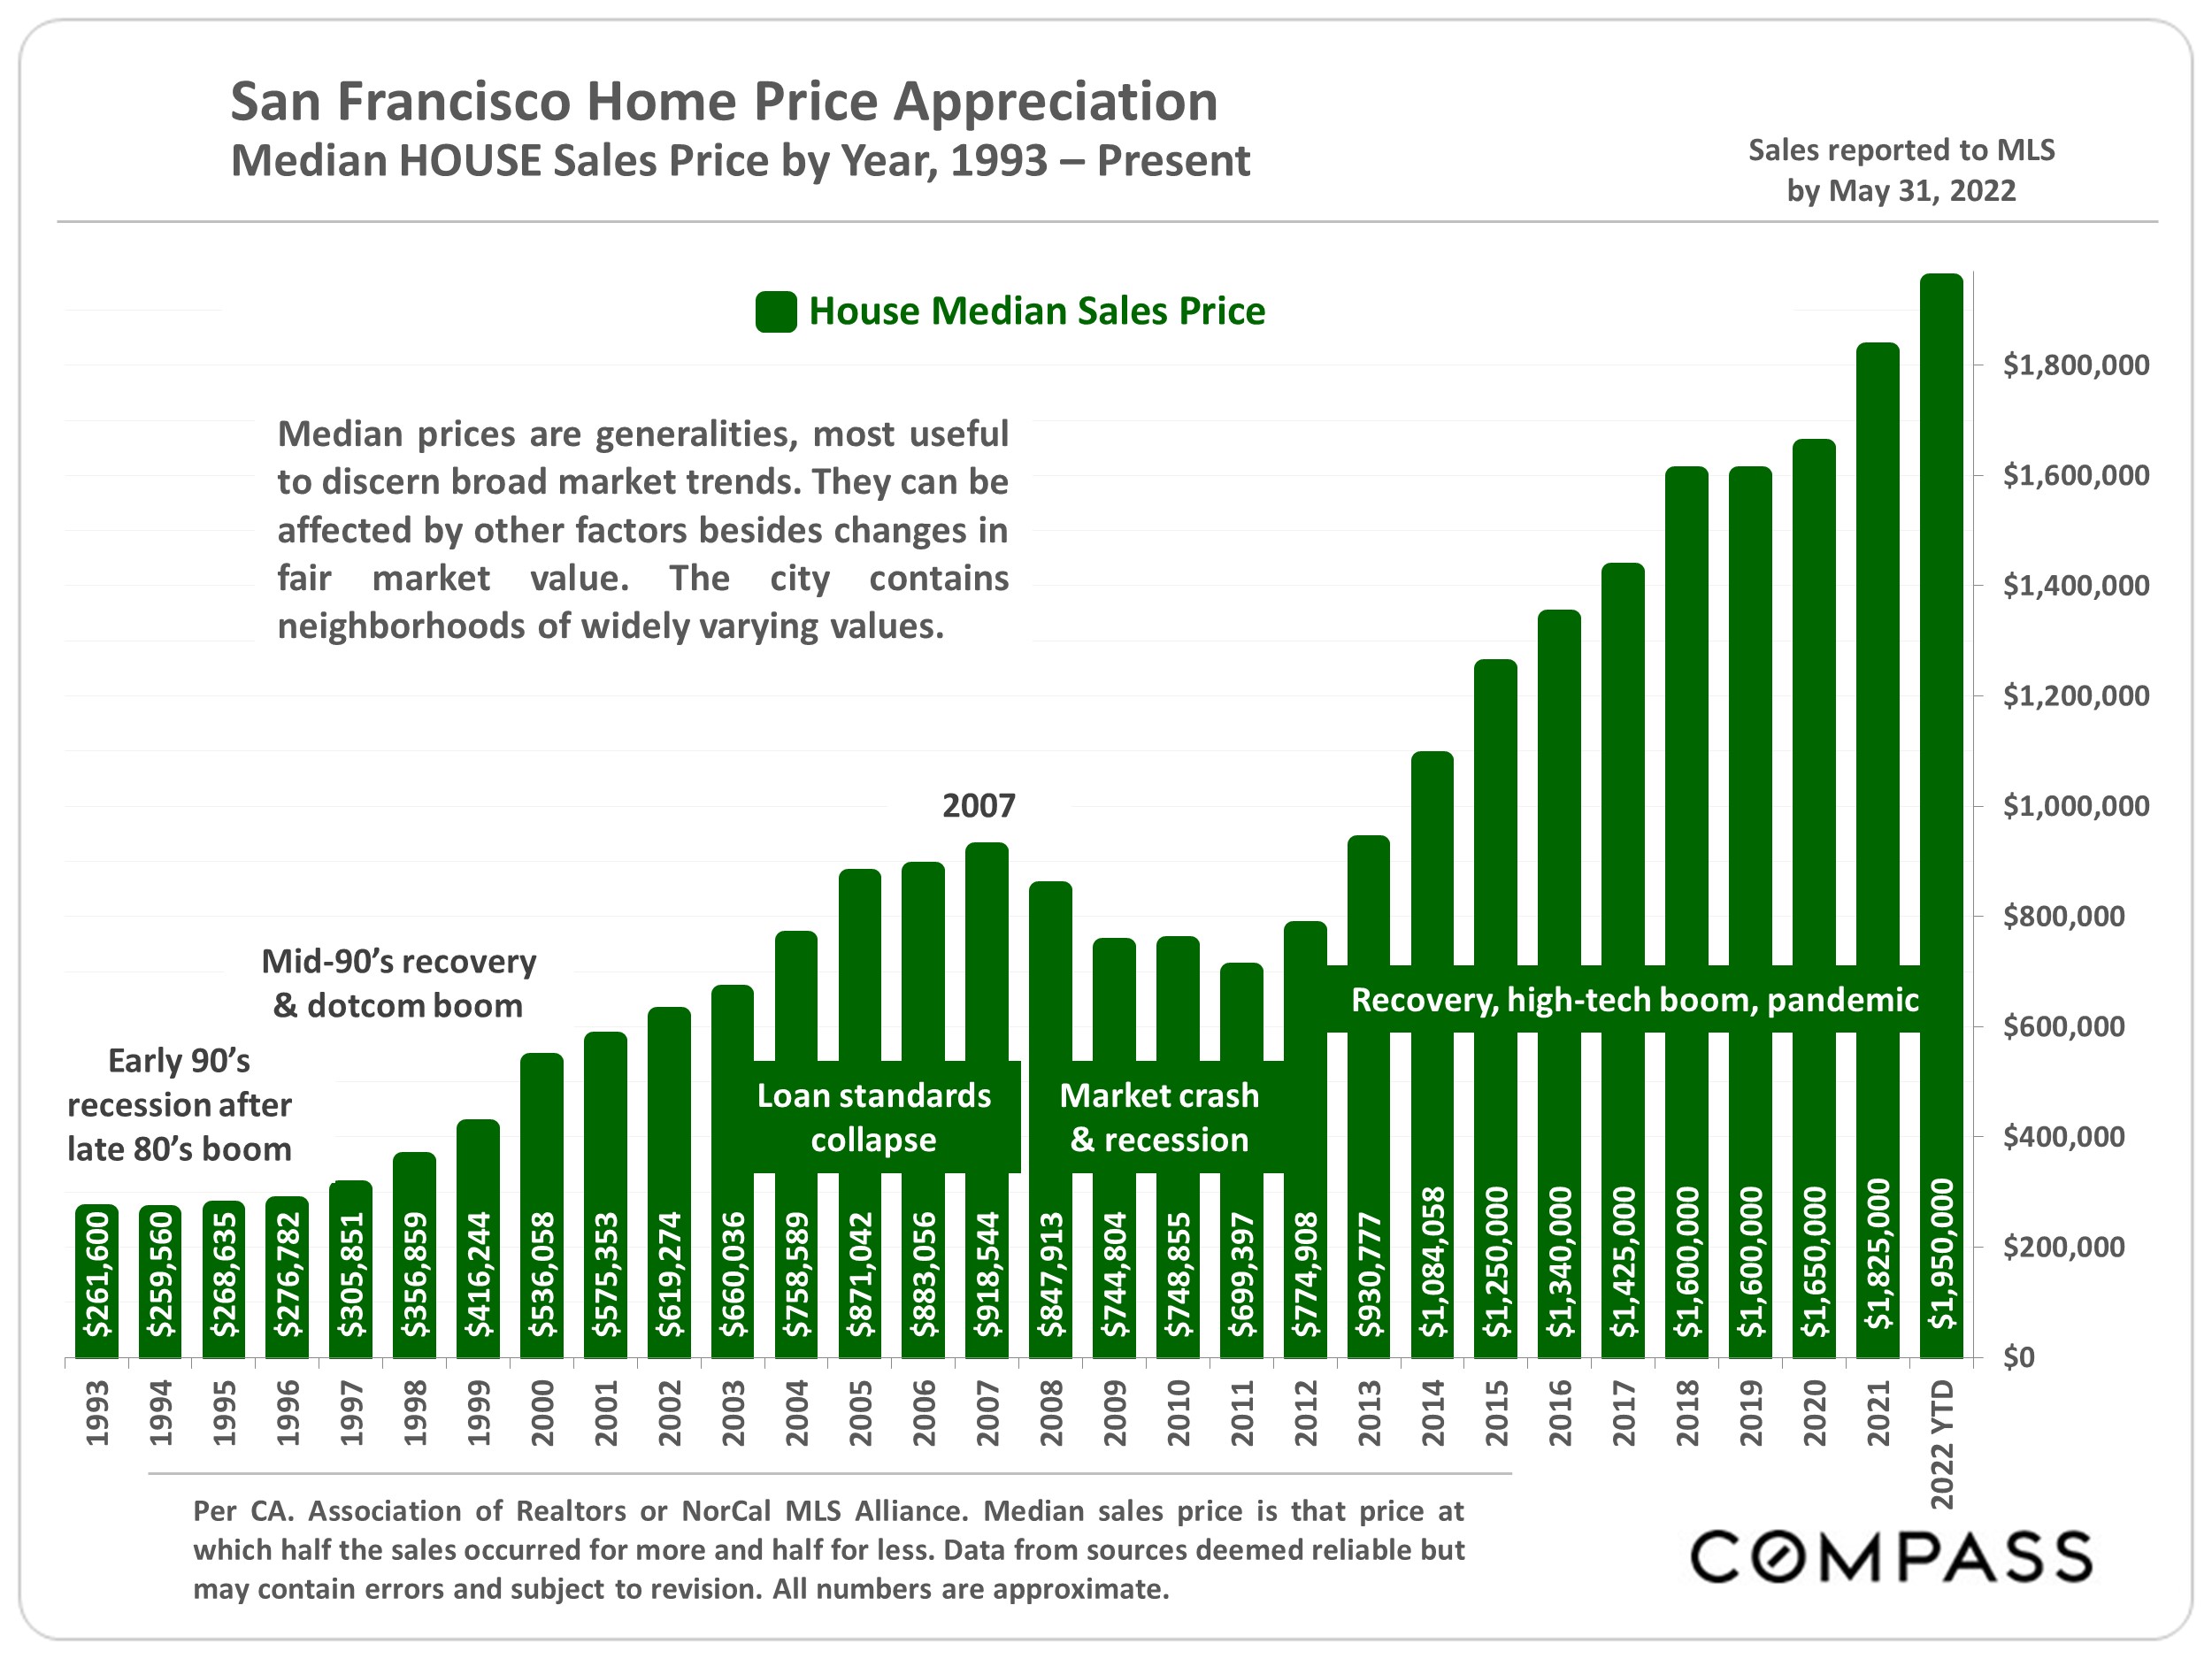 Graph showing San Francisco home price appreciation